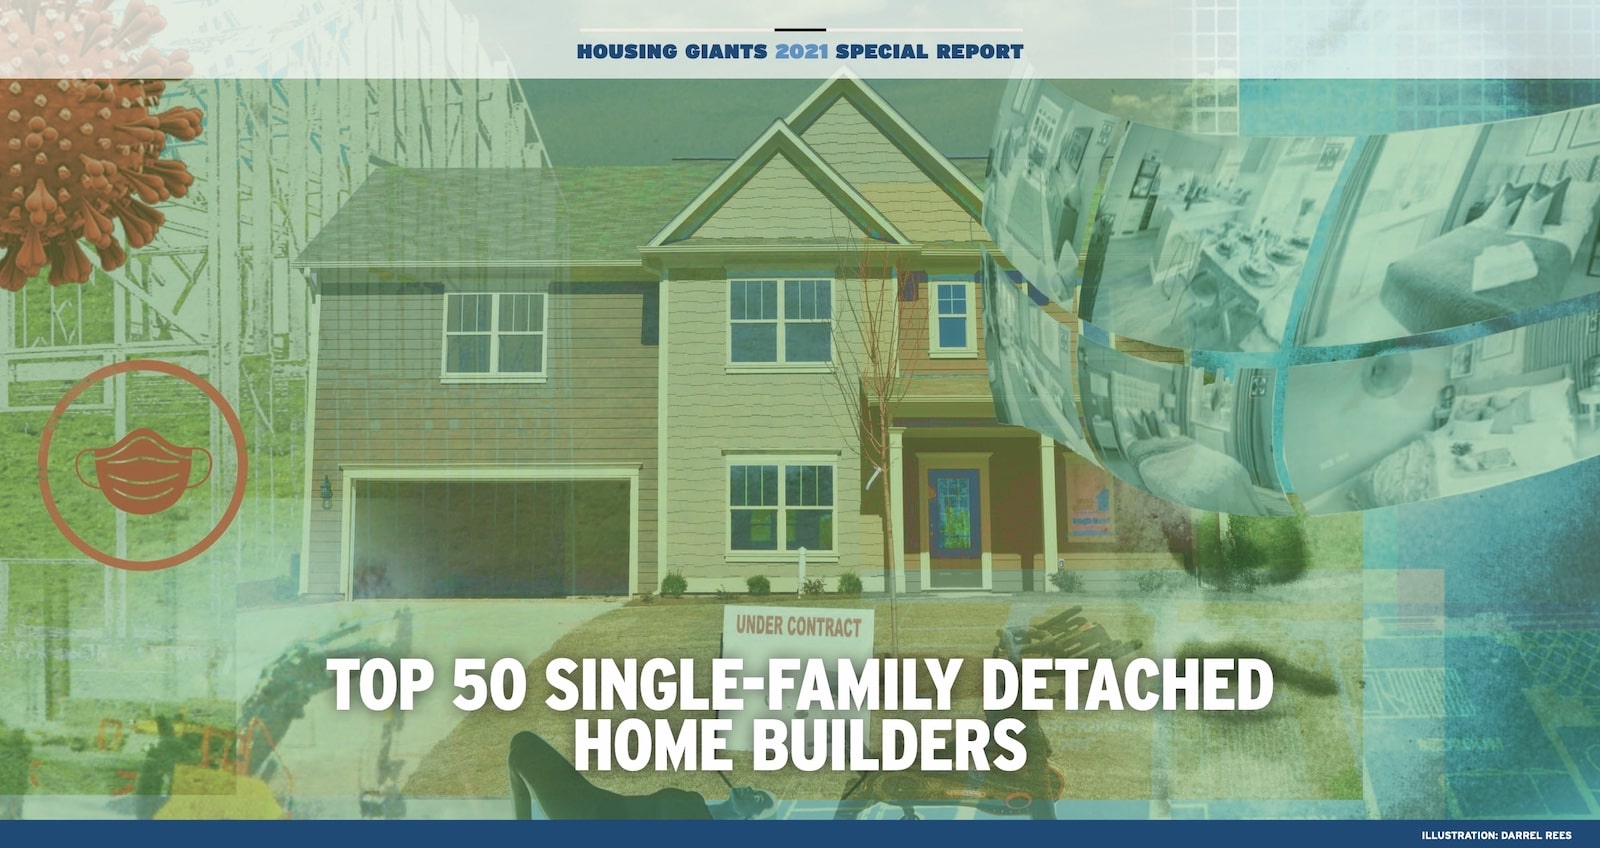 2021 Housing Giants—Top 50 Single-Family Detached Home Builders list